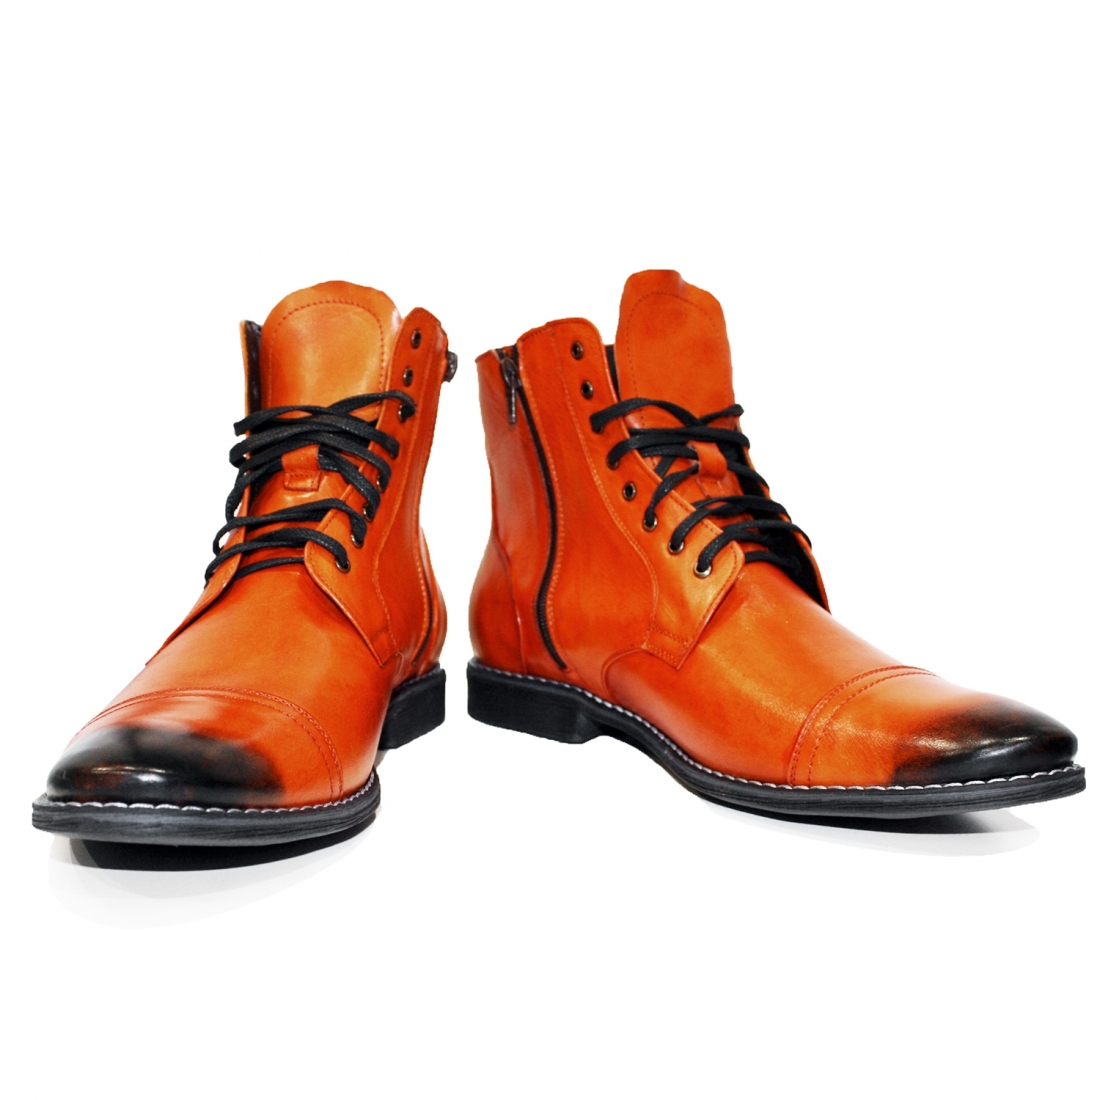 Modello Pallullo - High Boots - Handmade Colorful Italian Leather Shoes